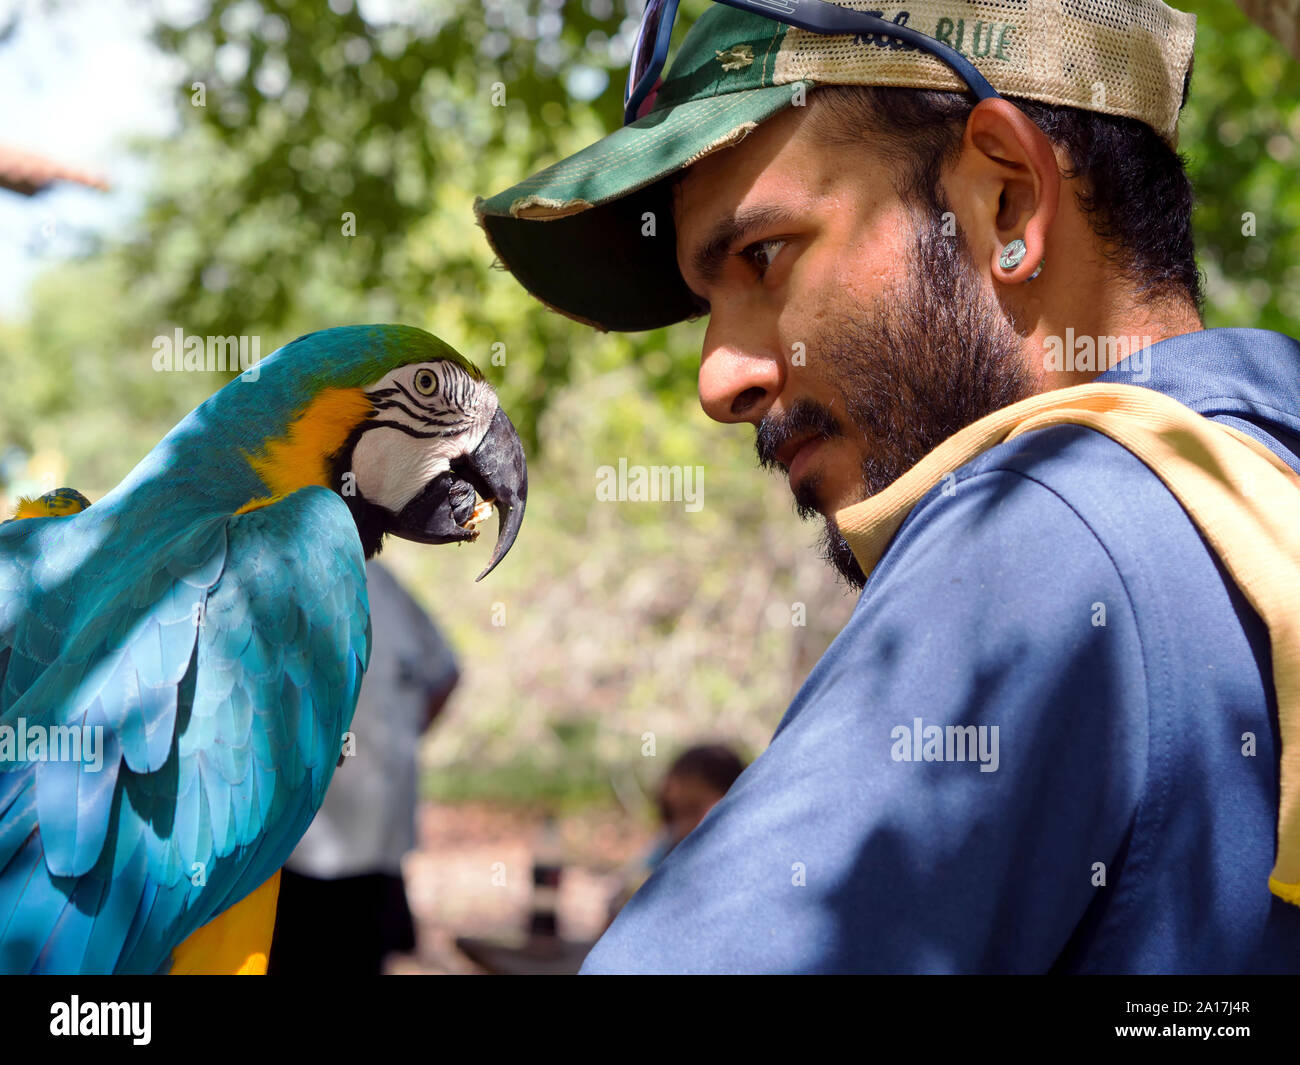 A Blue-and-yellow macaw, Ara ararauna, and its handler make eye contact. South Texas Botanical Gardens & Nature Center in Corpus Christi, Texas USA. Stock Photo